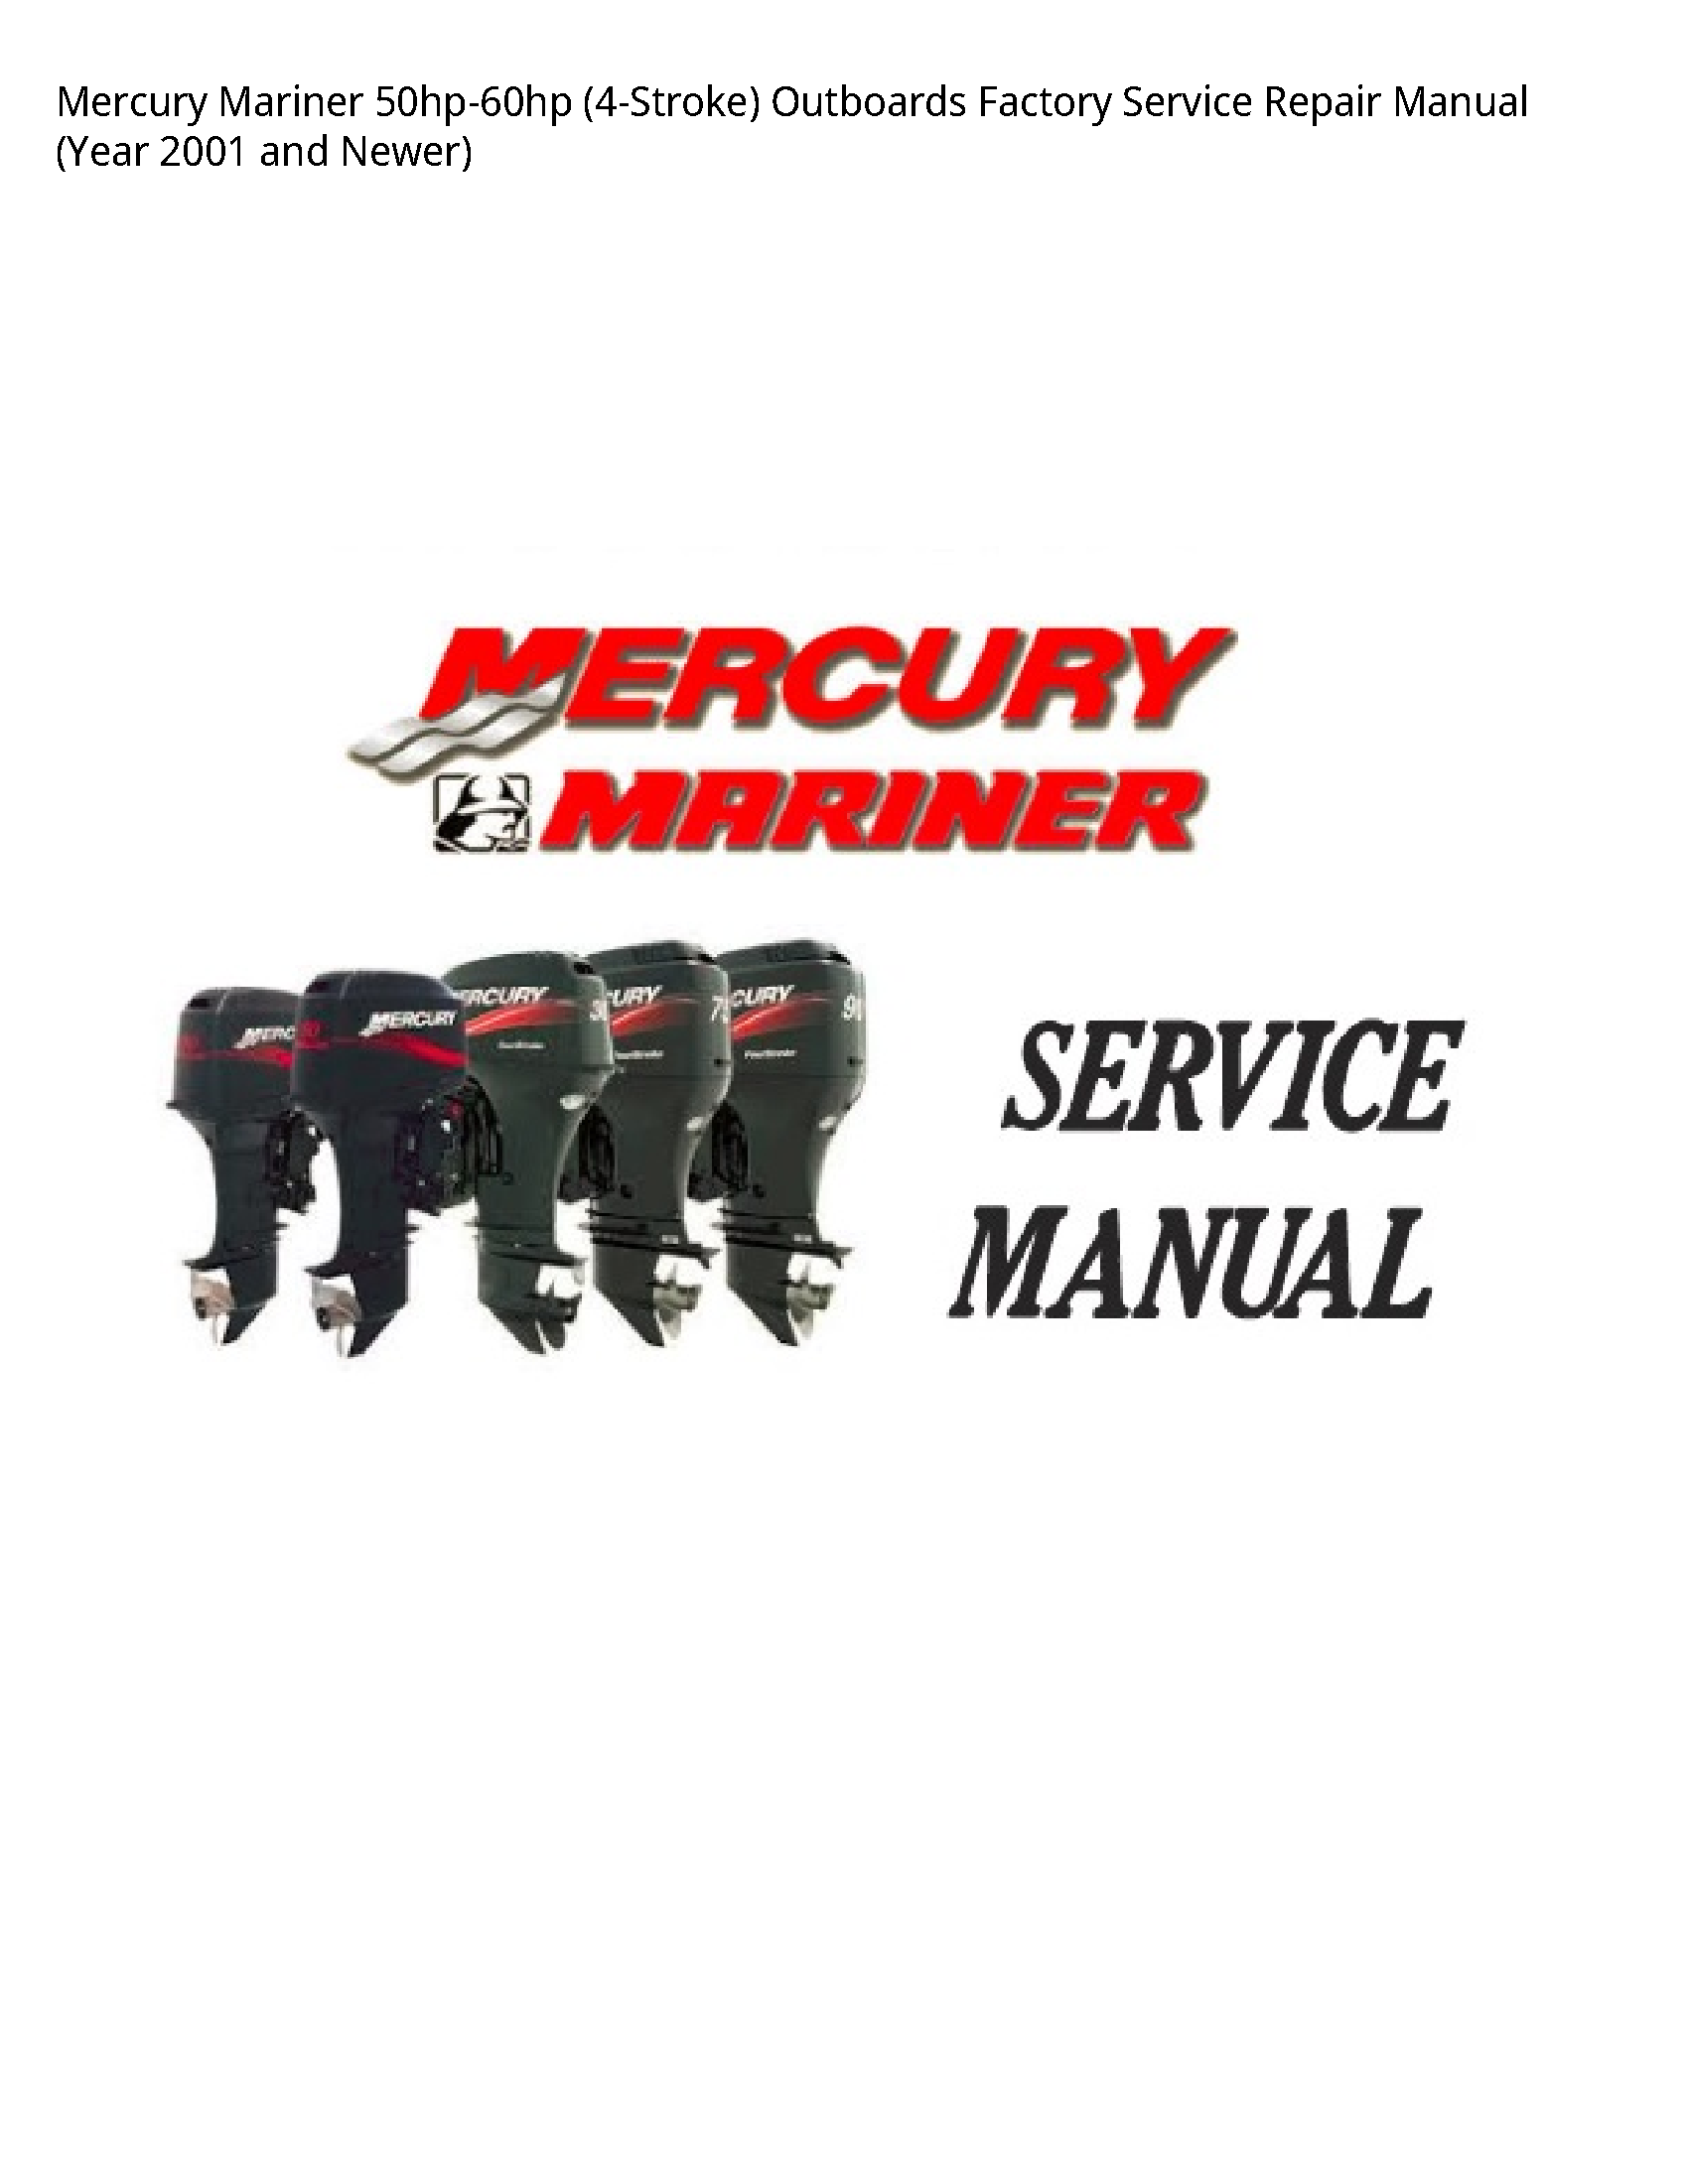 Mercury Mariner 50hp-60hp Outboards Factory manual